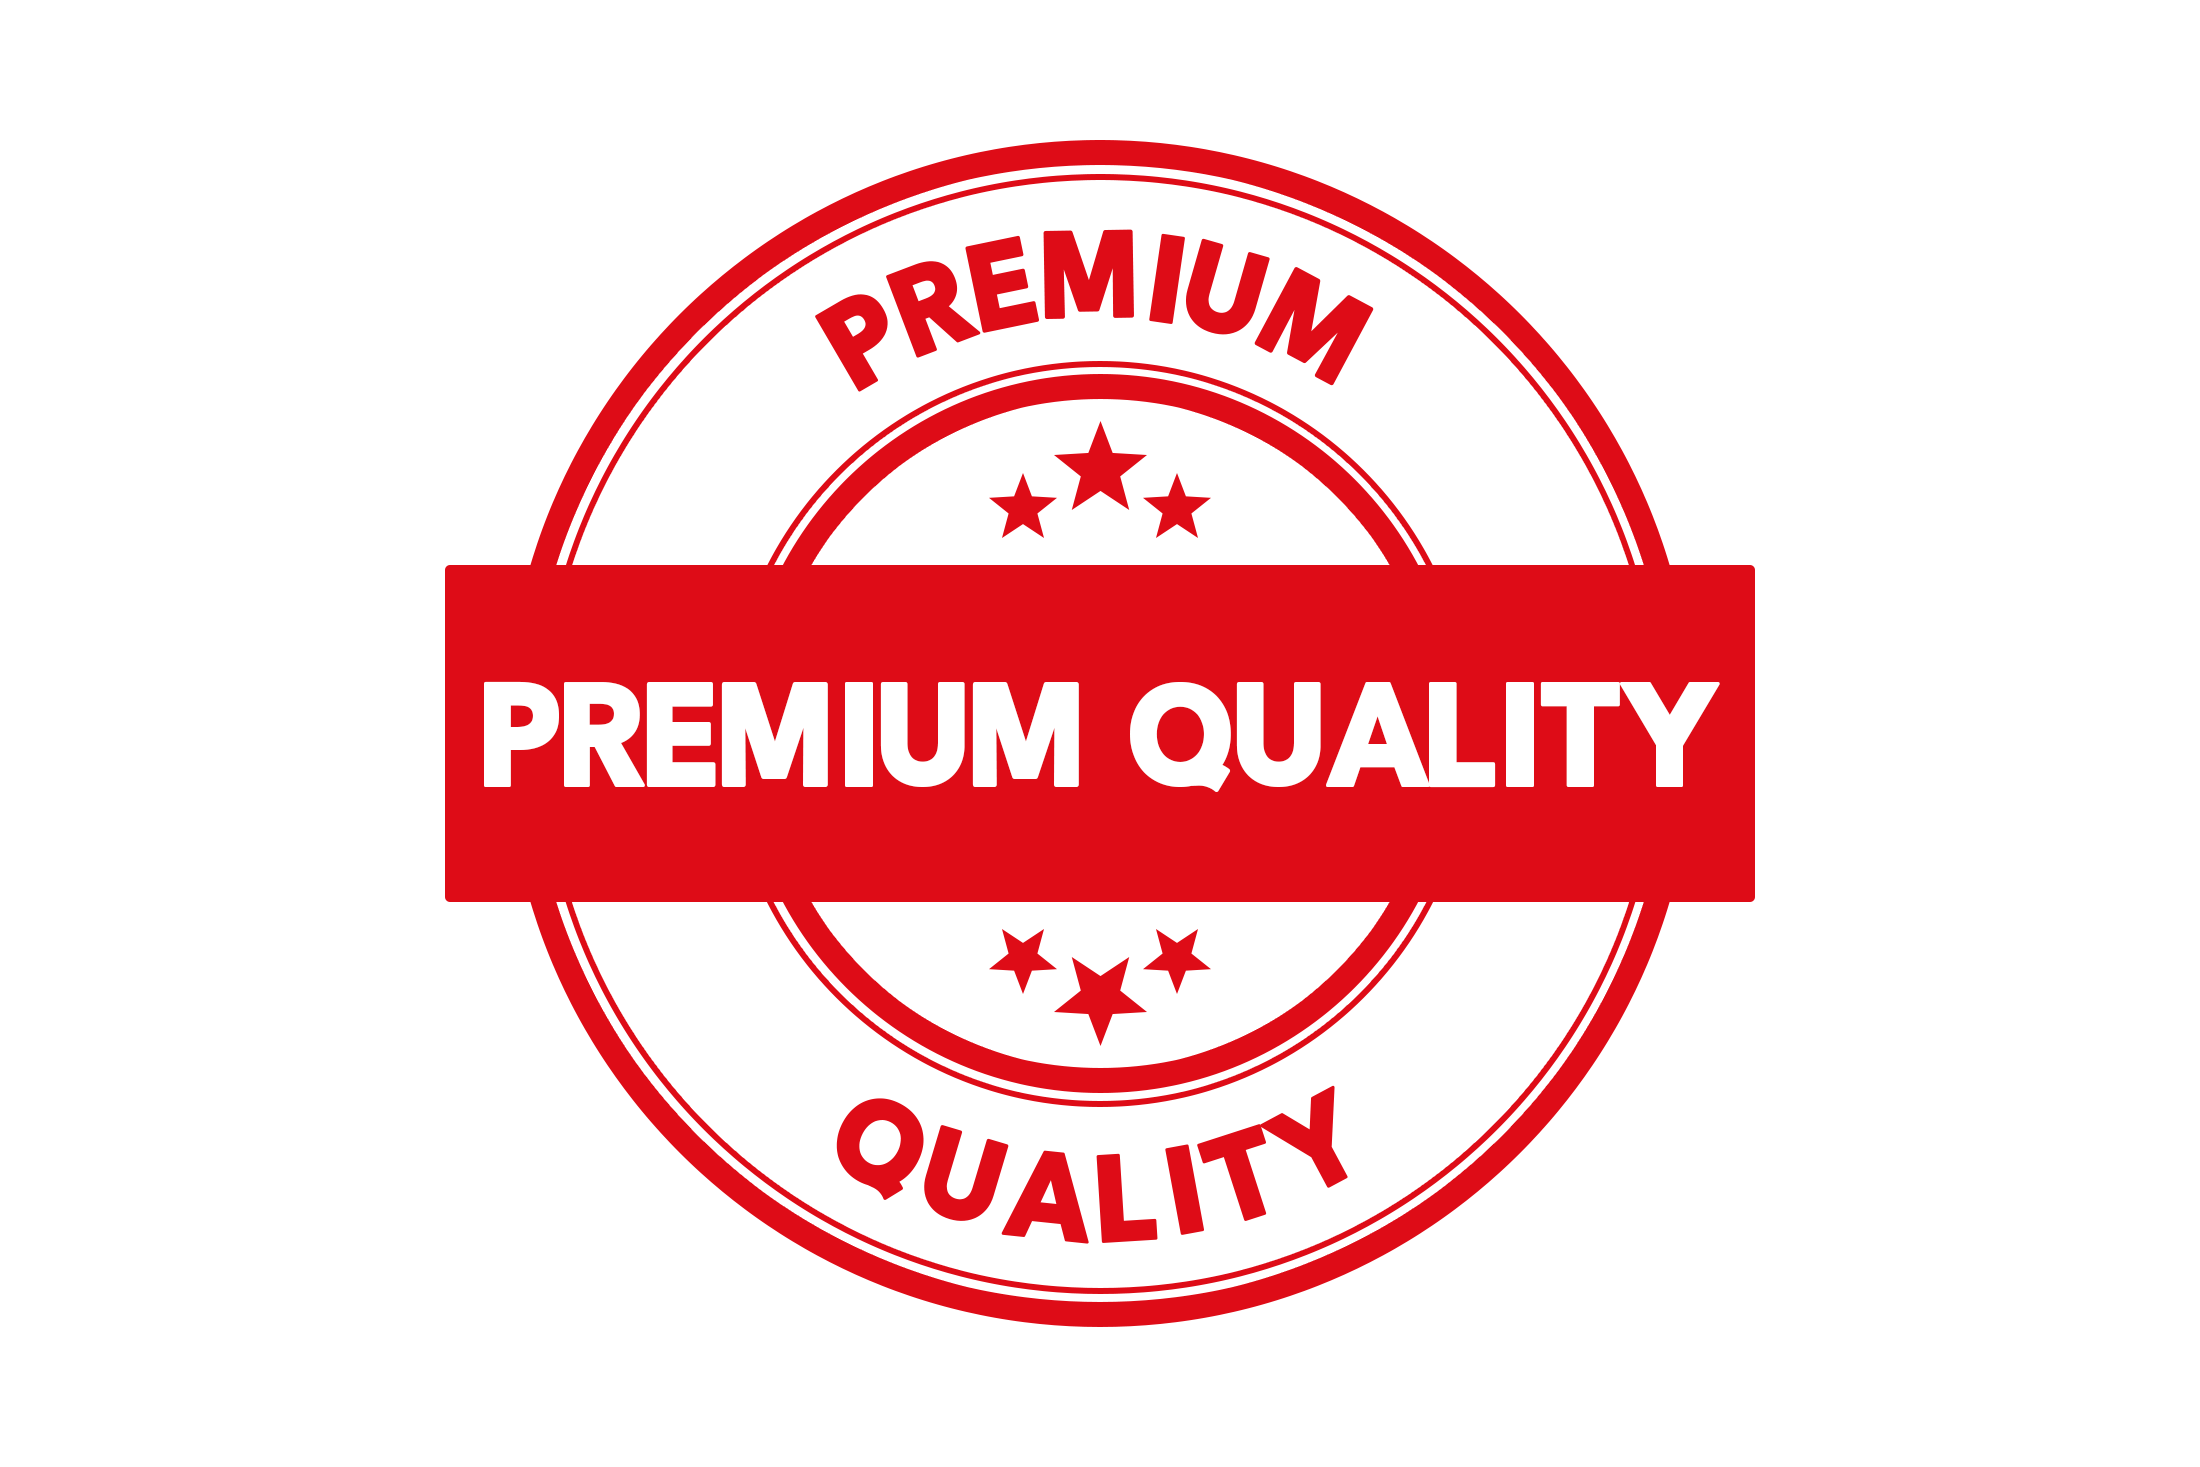 Badge Premium Quality Vector Art PNG, Premium Quality Label Or Badge,  Premium, Quality, Premium Quality PNG Image For Free Download